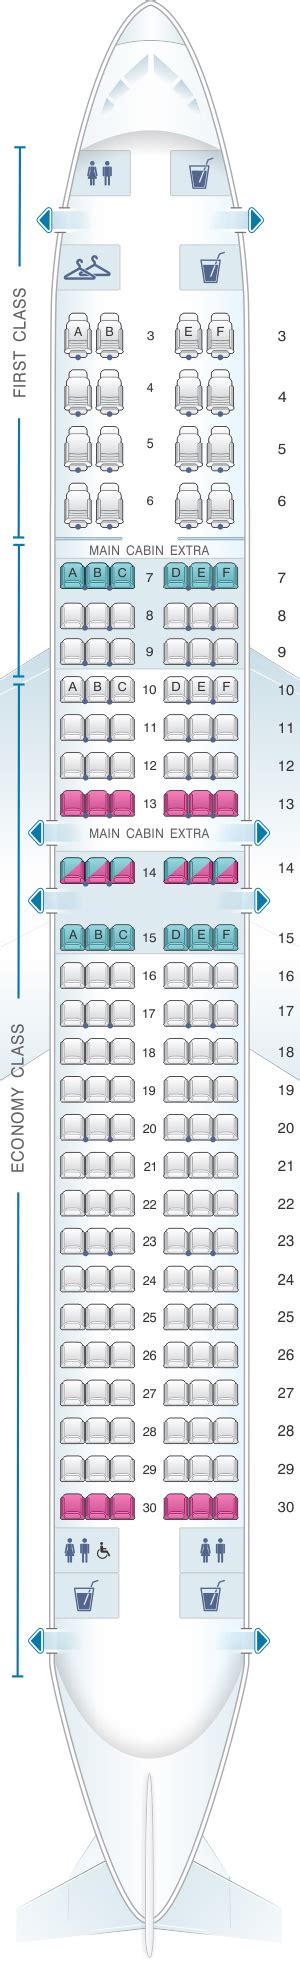 aa boeing 737-800 seating chart